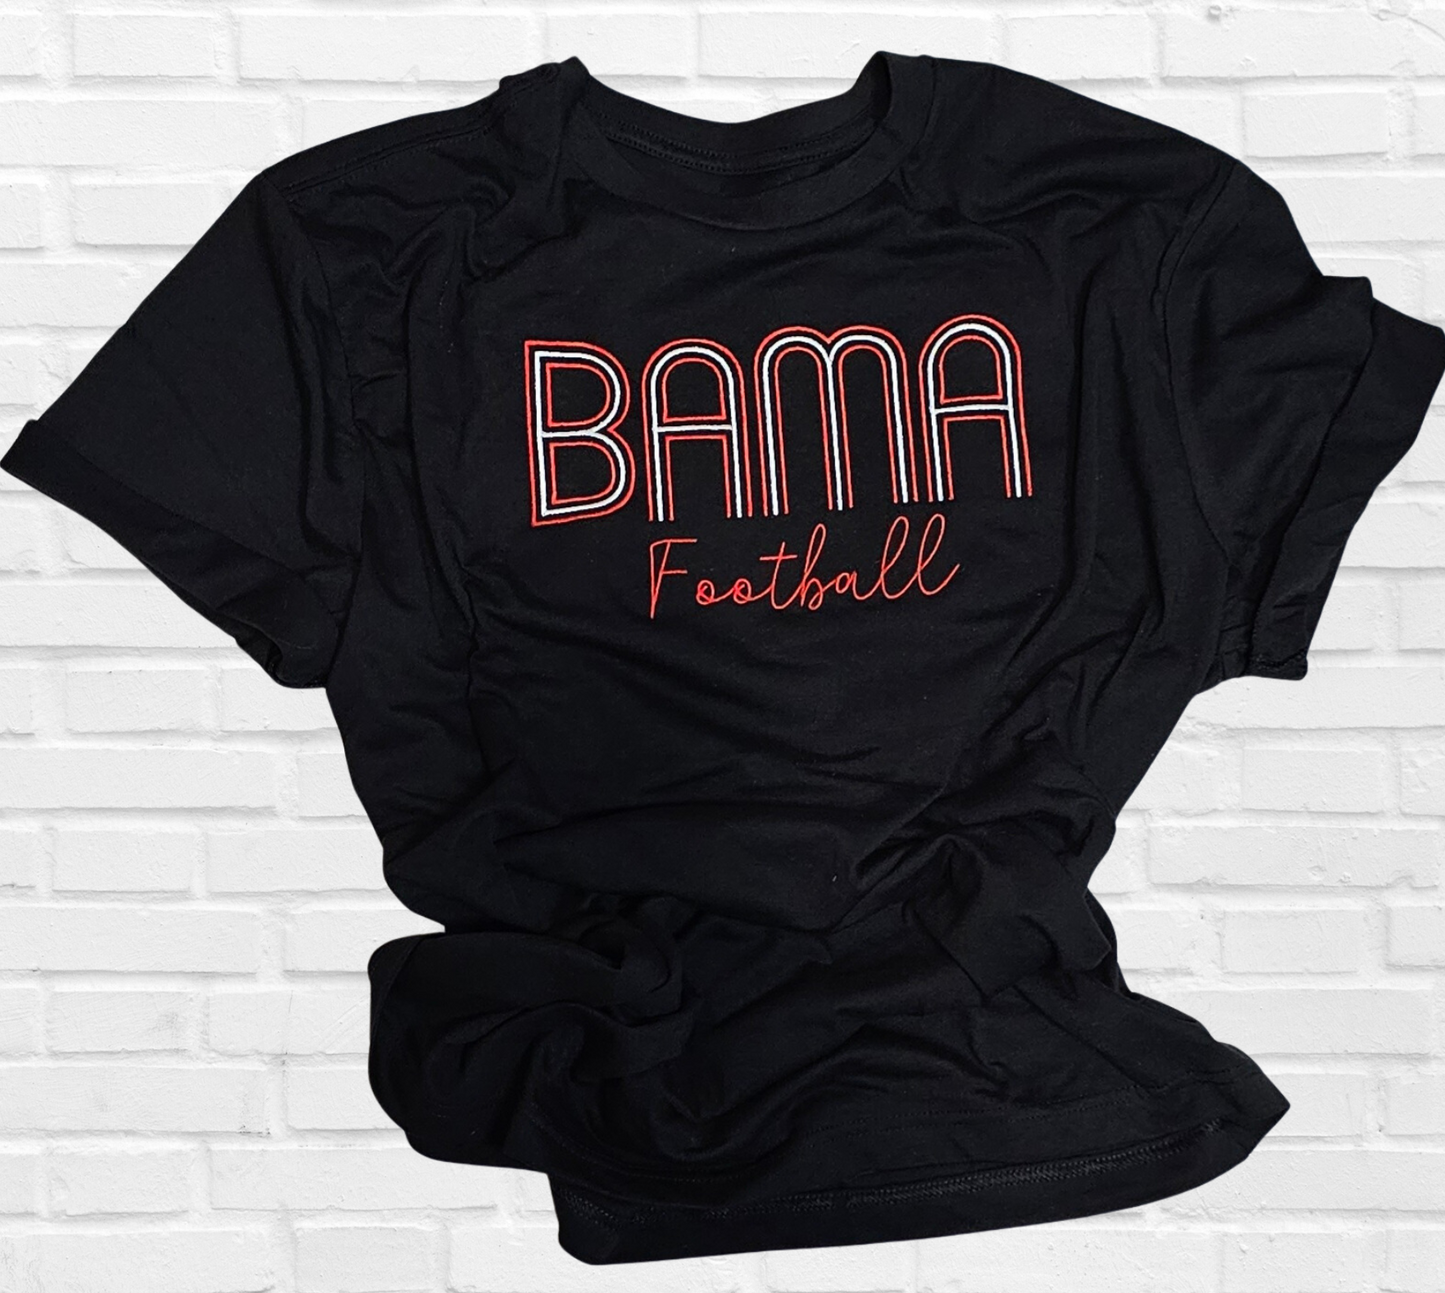 Embroidered Bama Football T-shirt